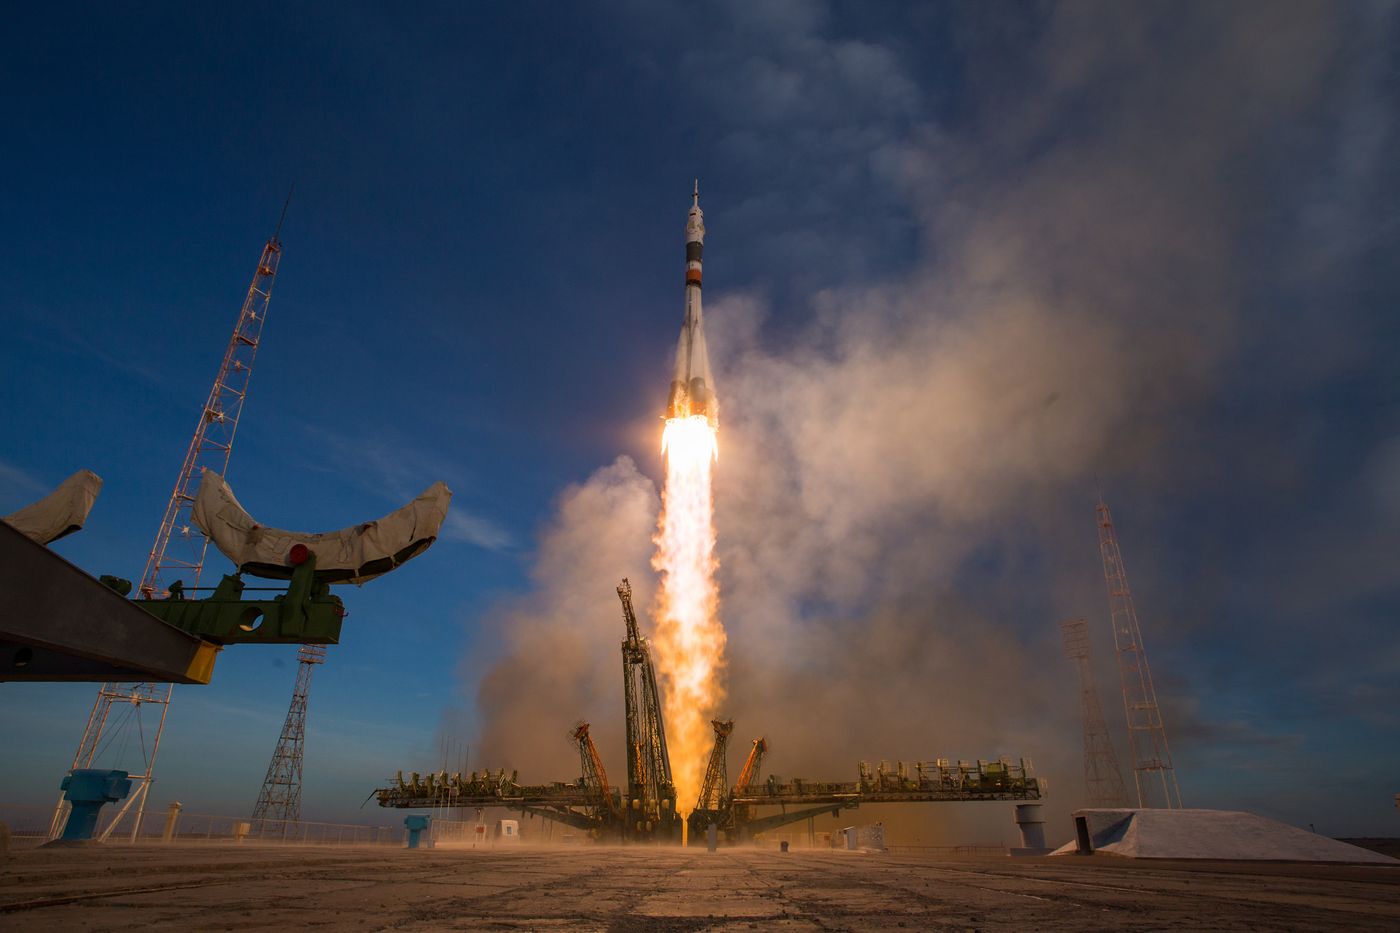 The Soyuz rocket blasted off from the Baikonur Cosmodrome in Kazakhstan.